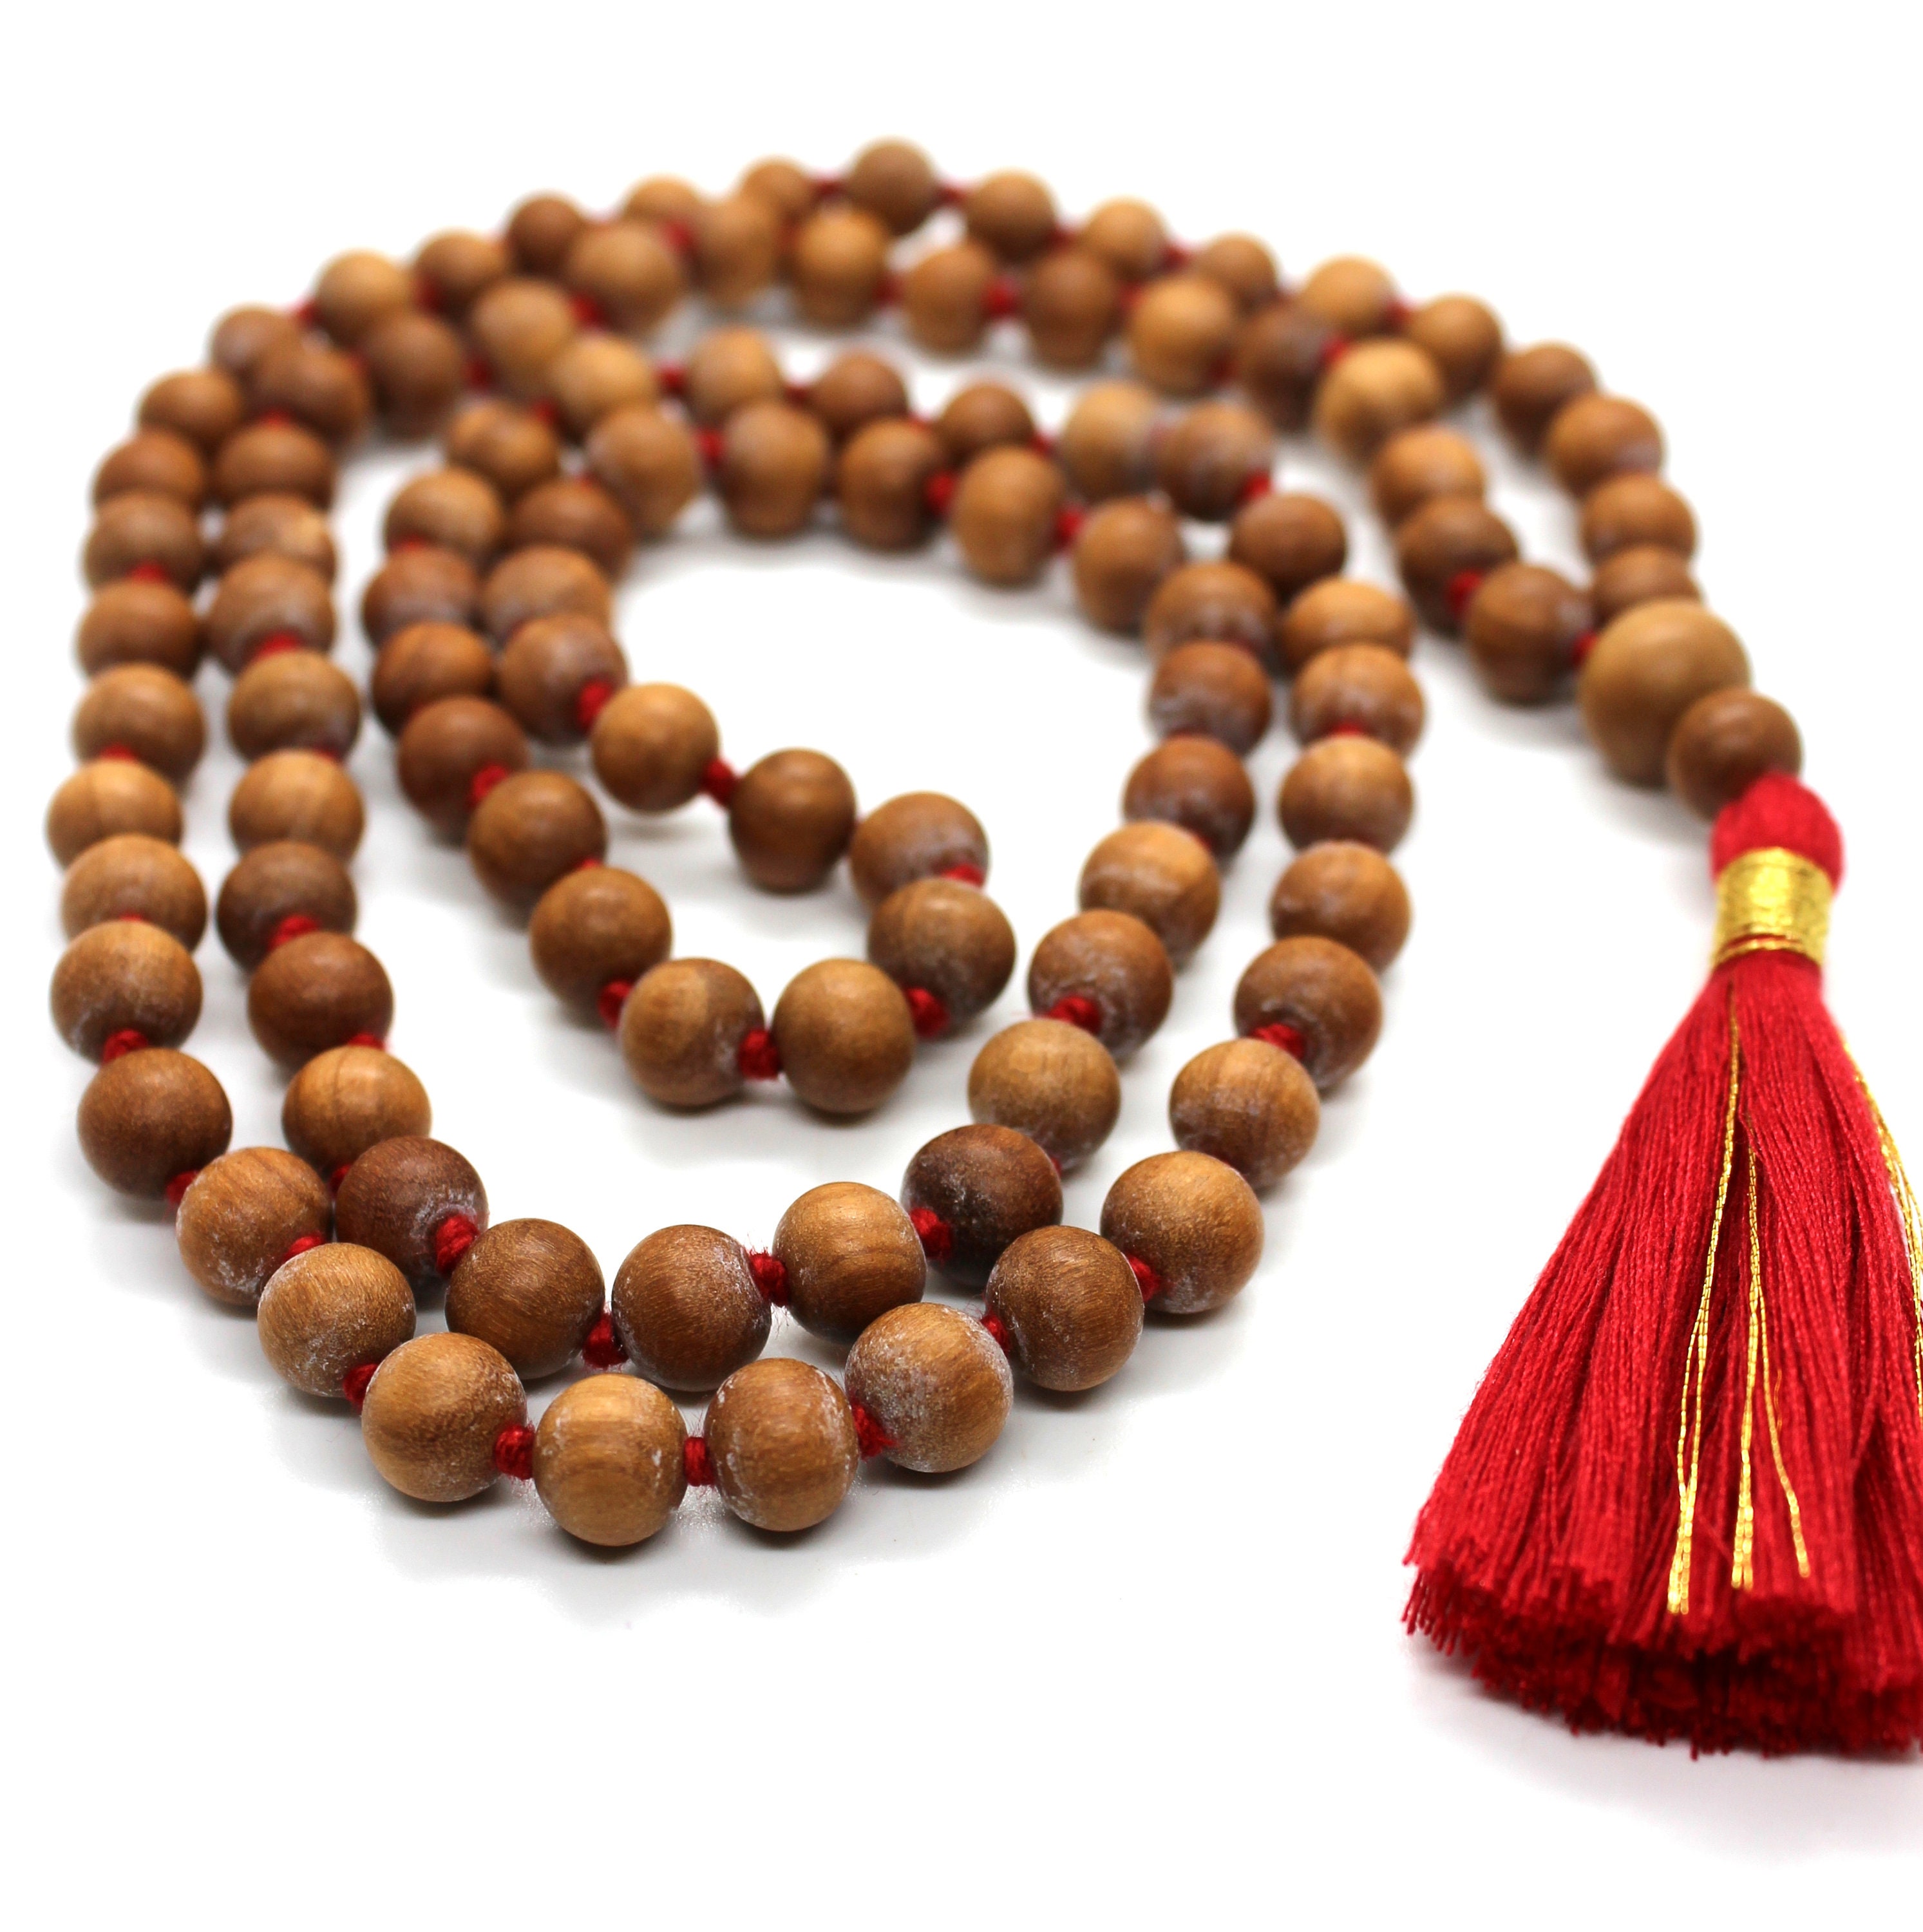 Phoenix Tail Mala Beads - Still Sitting Meditation Supply